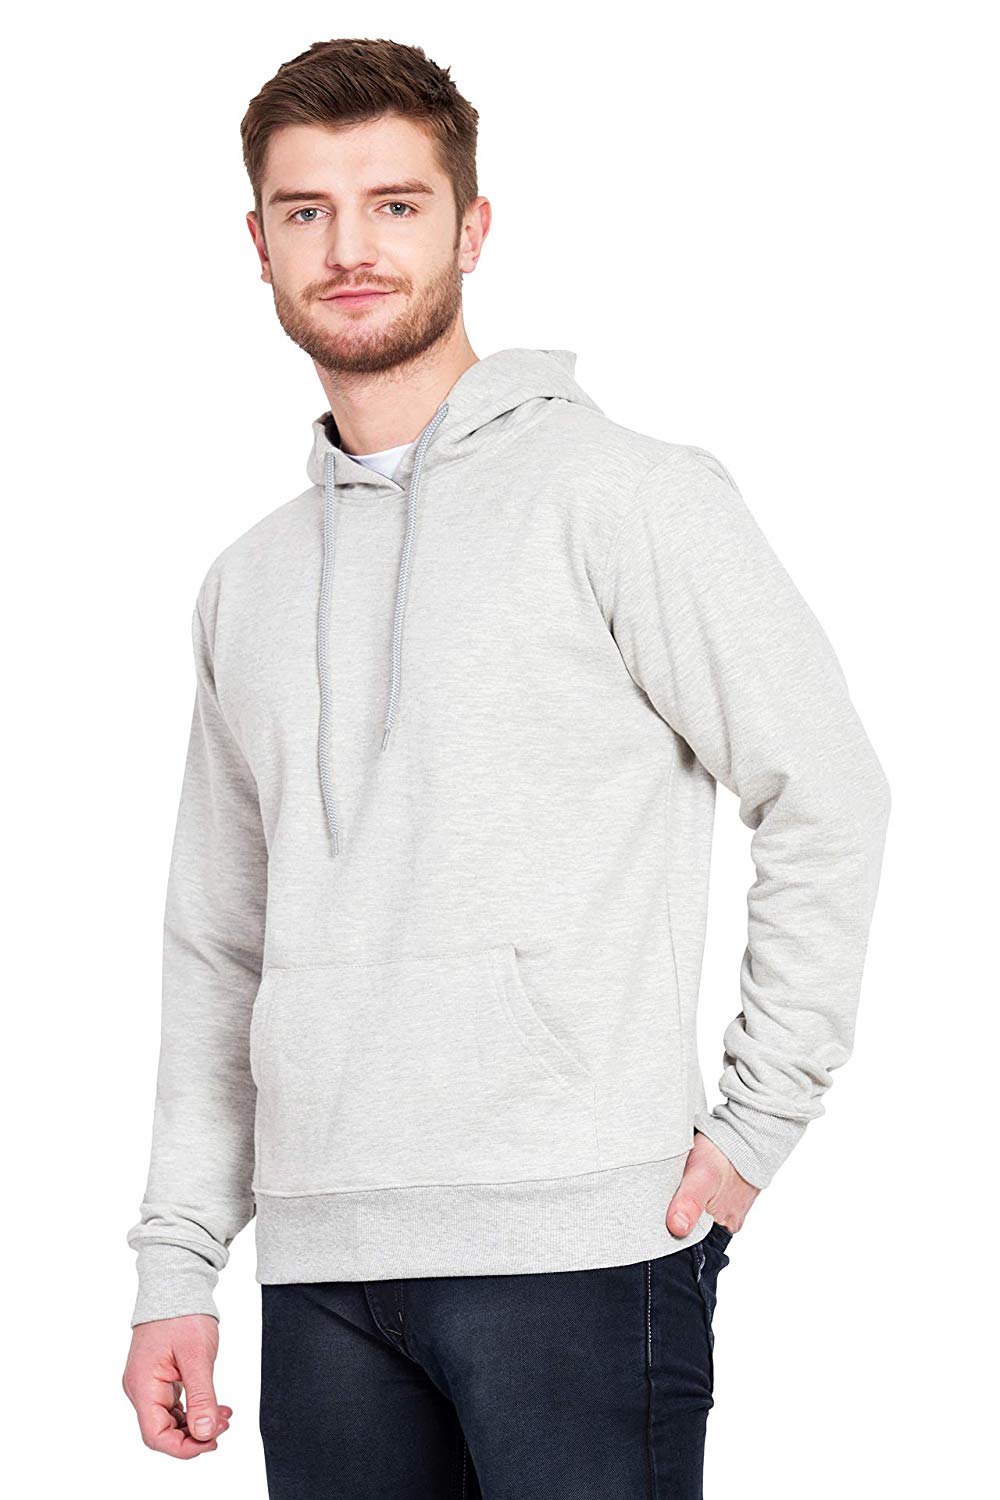 100 % Cotton Hoodies For Men | Grey Color